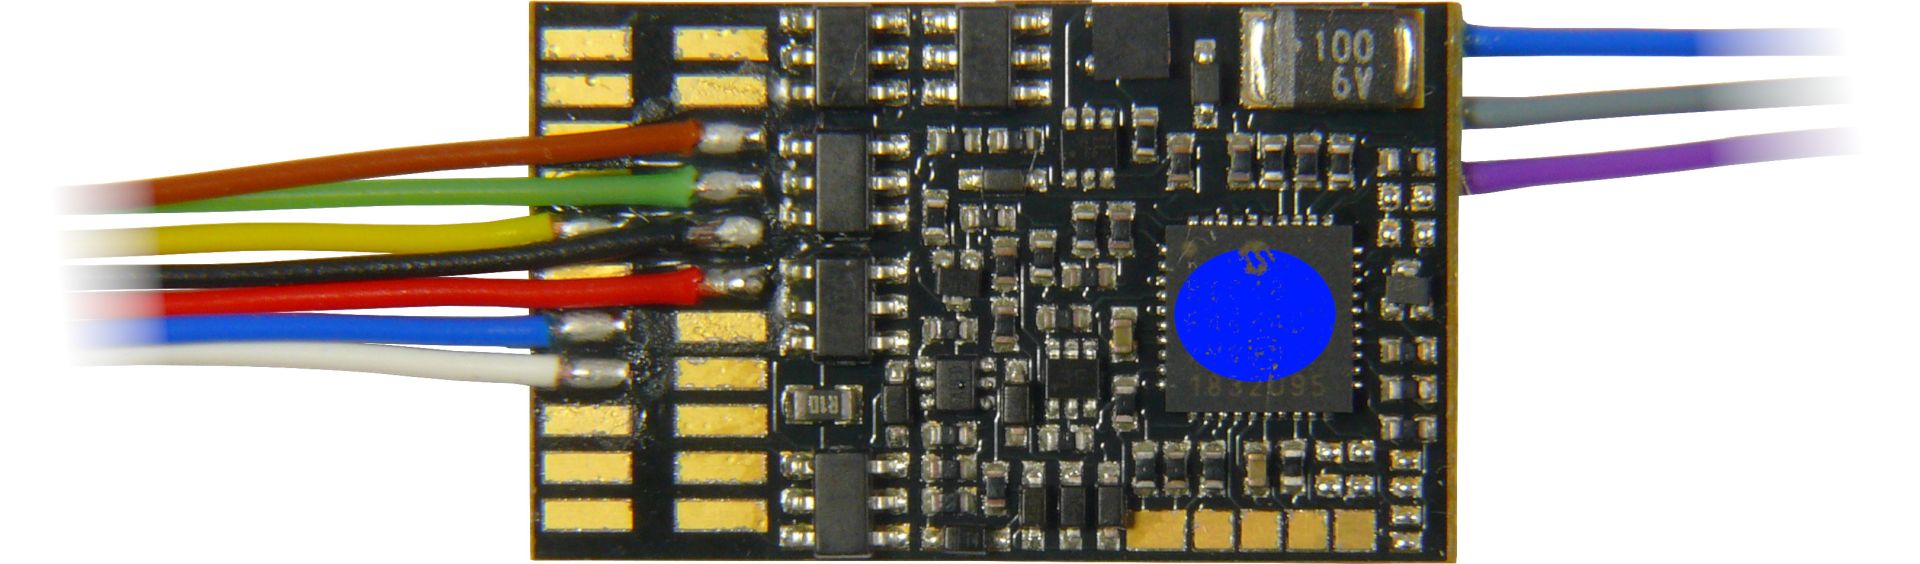 Zimo MX675V - Funktionsdecoder, 25x15x4mm, 1,8 A, 10 offene Kabelenden